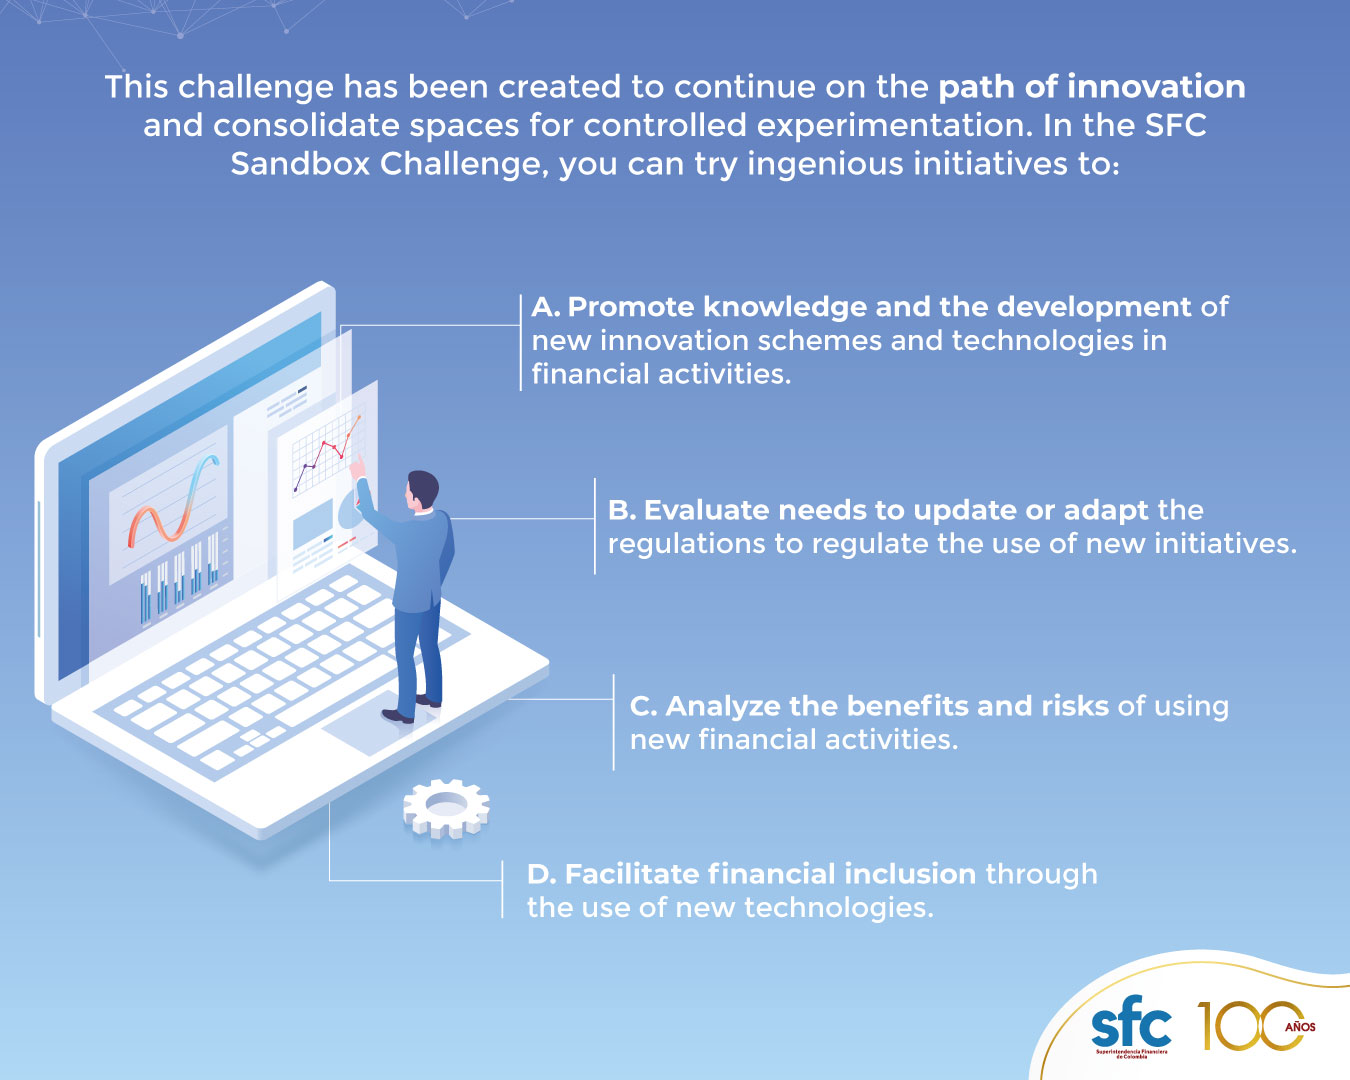 10. Why was the SFC 2022 Sandbox Challenge created?